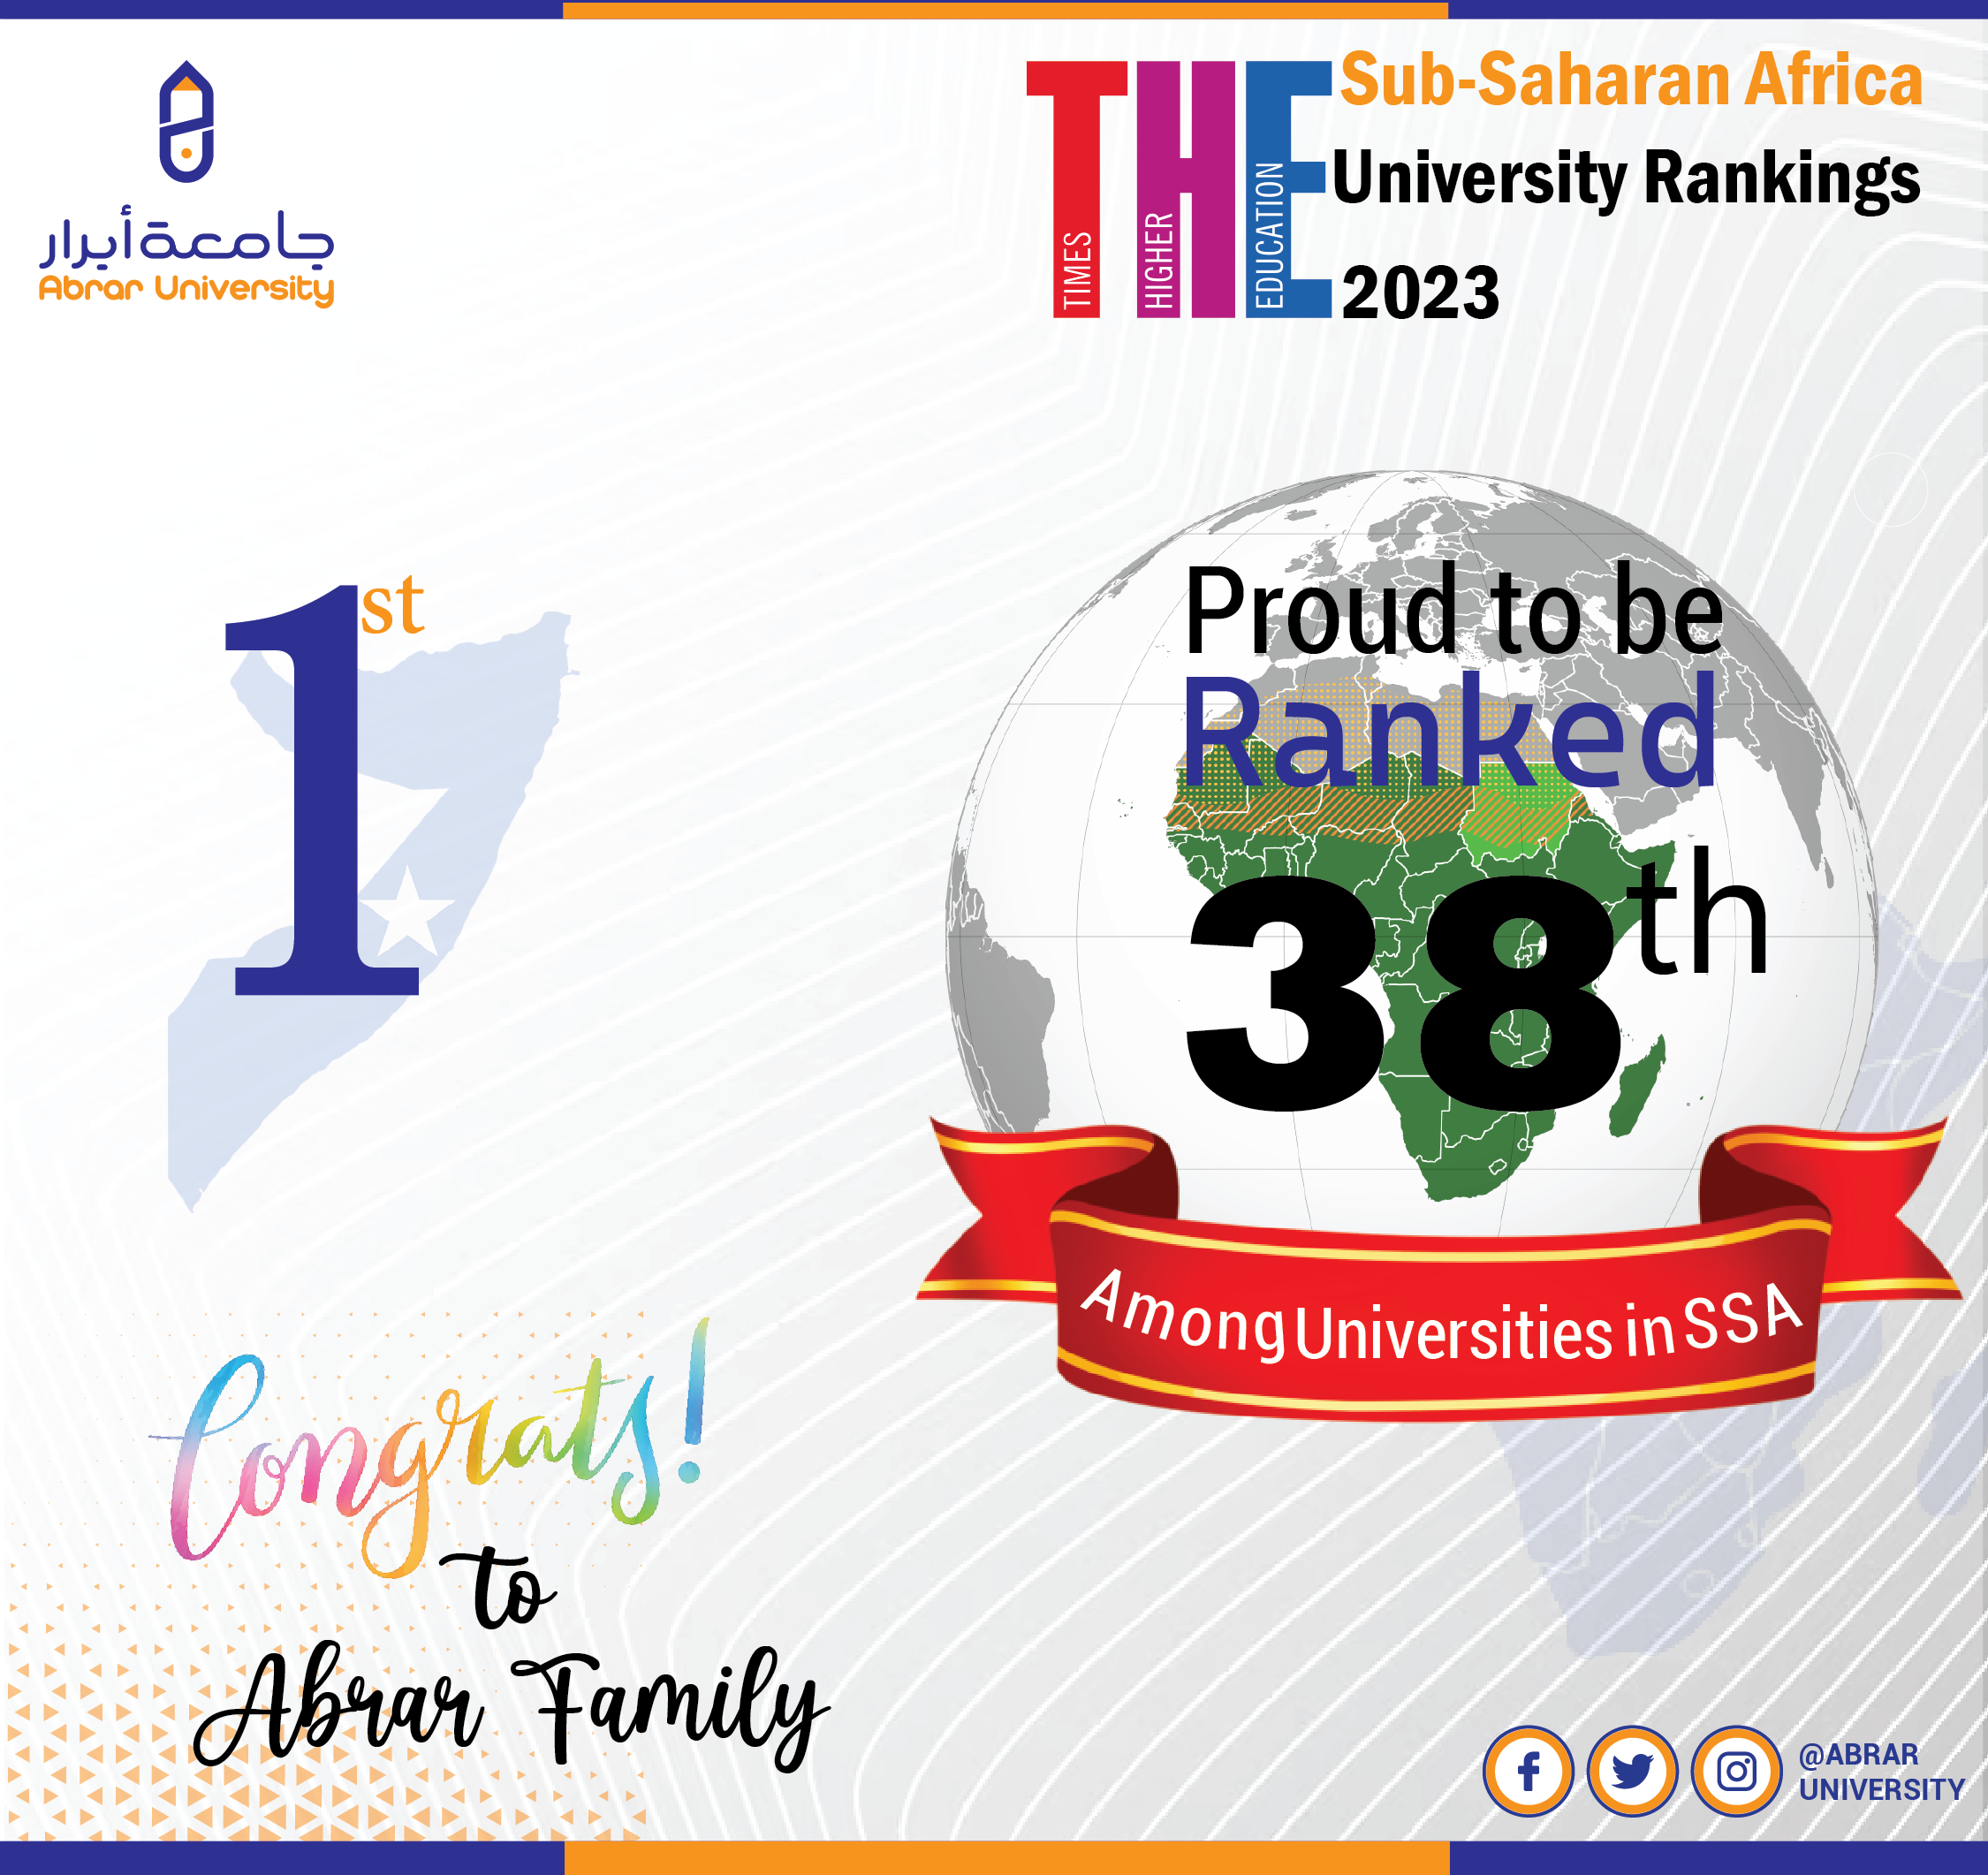 University Ranking, Sub-Saharan Africa, SSA, Somalia